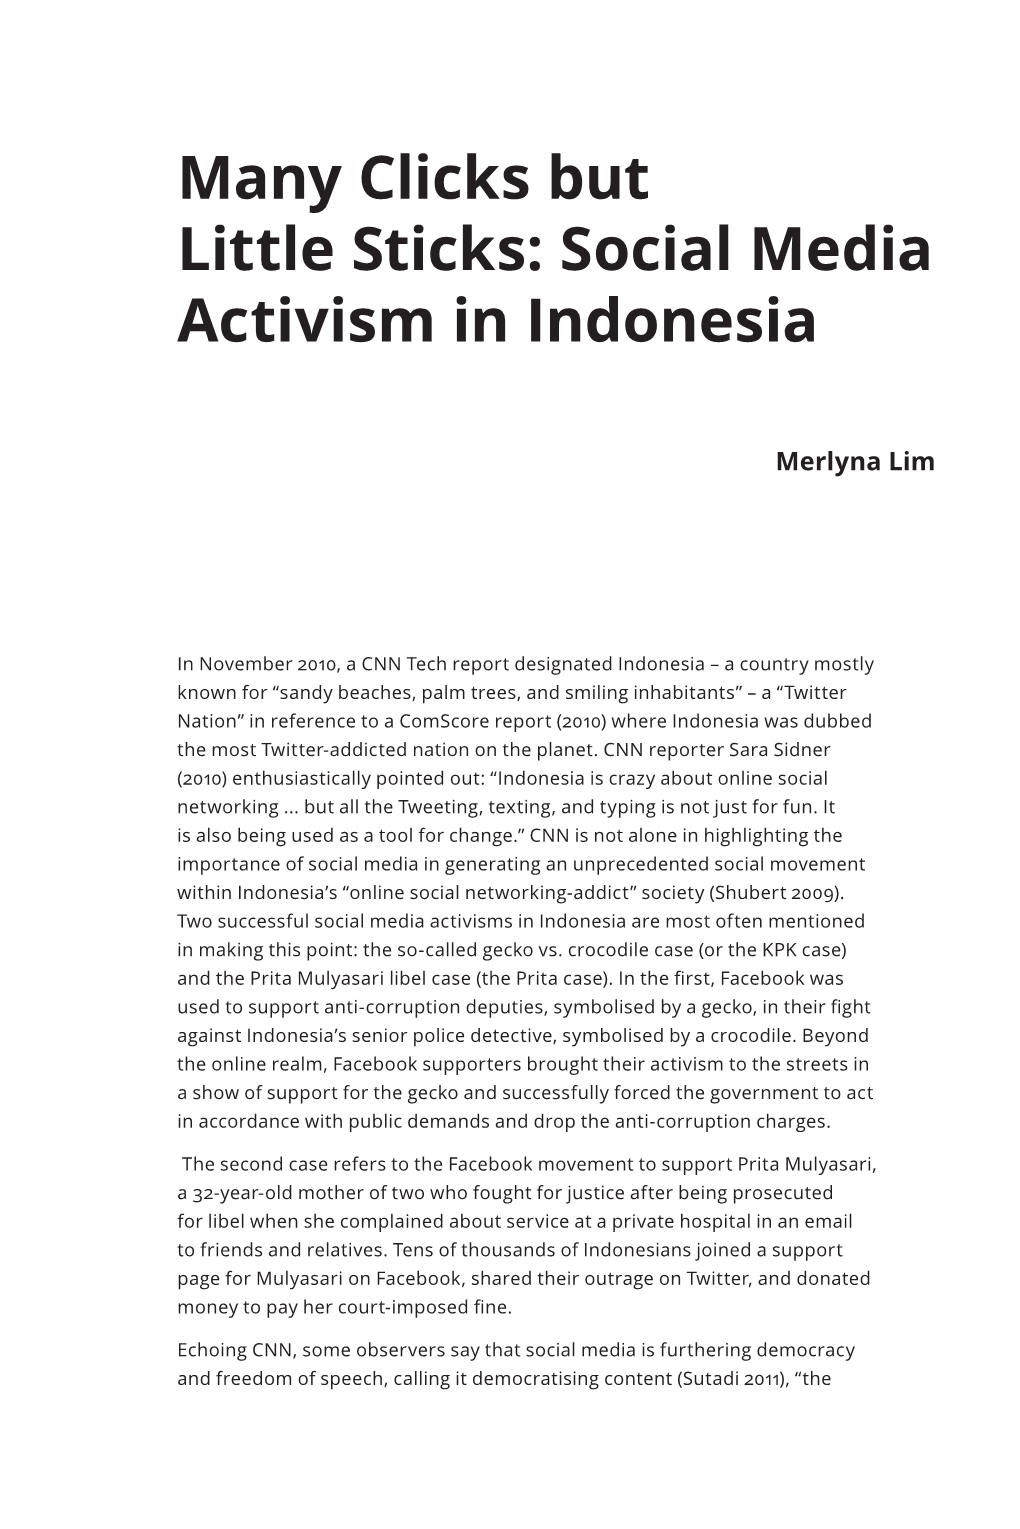 Many Clicks but Little Sticks: Social Media Activism in Indonesia